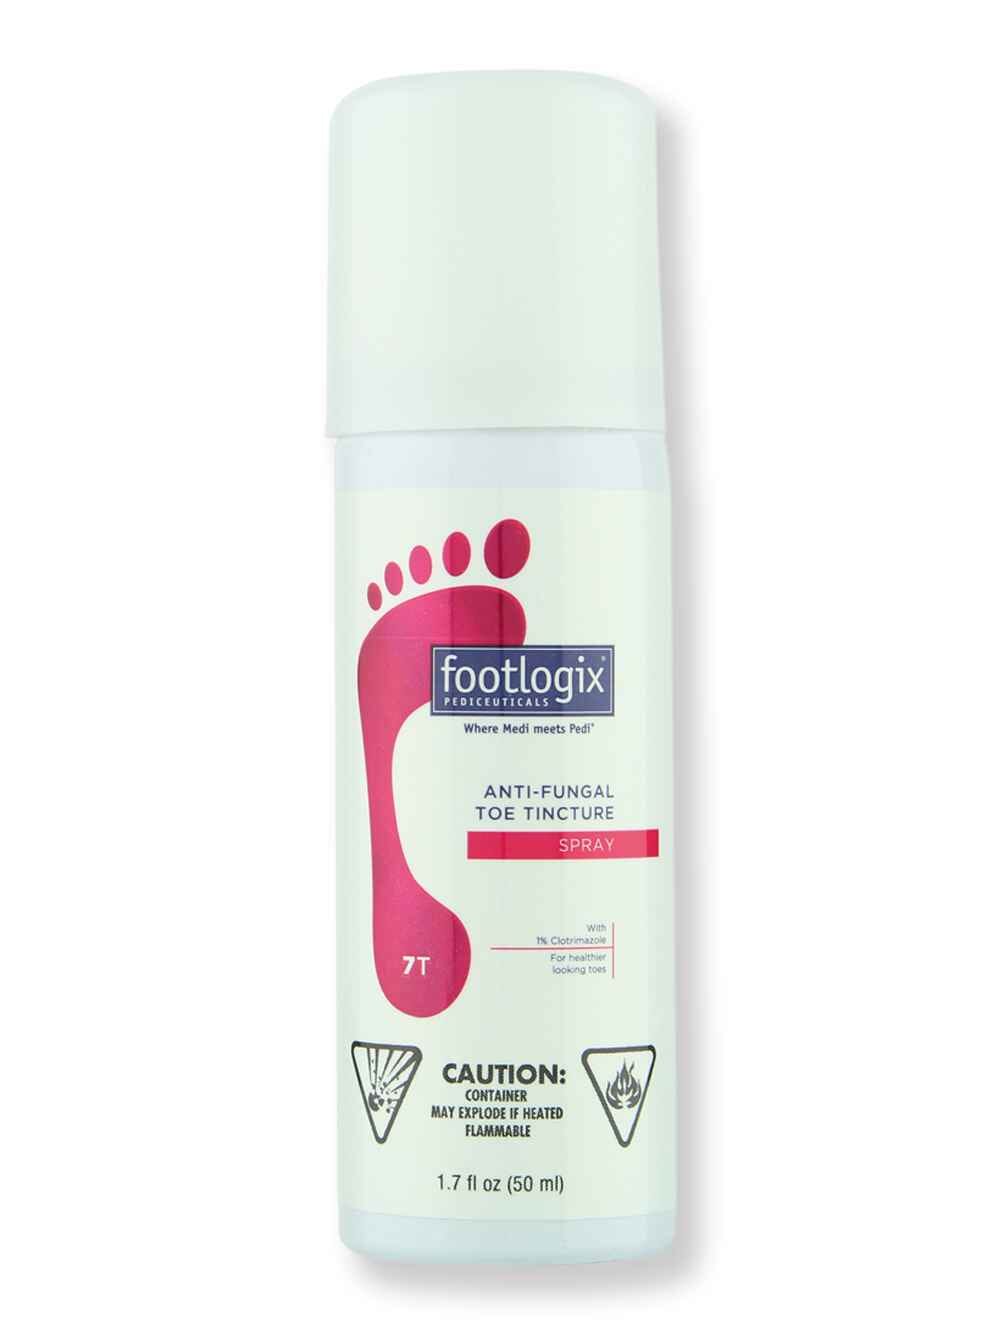 Footlogix Footlogix Anti-Fungal Toe Nail Tincture With Clotrimazole 1.7 fl oz50 ml Nail Tools 